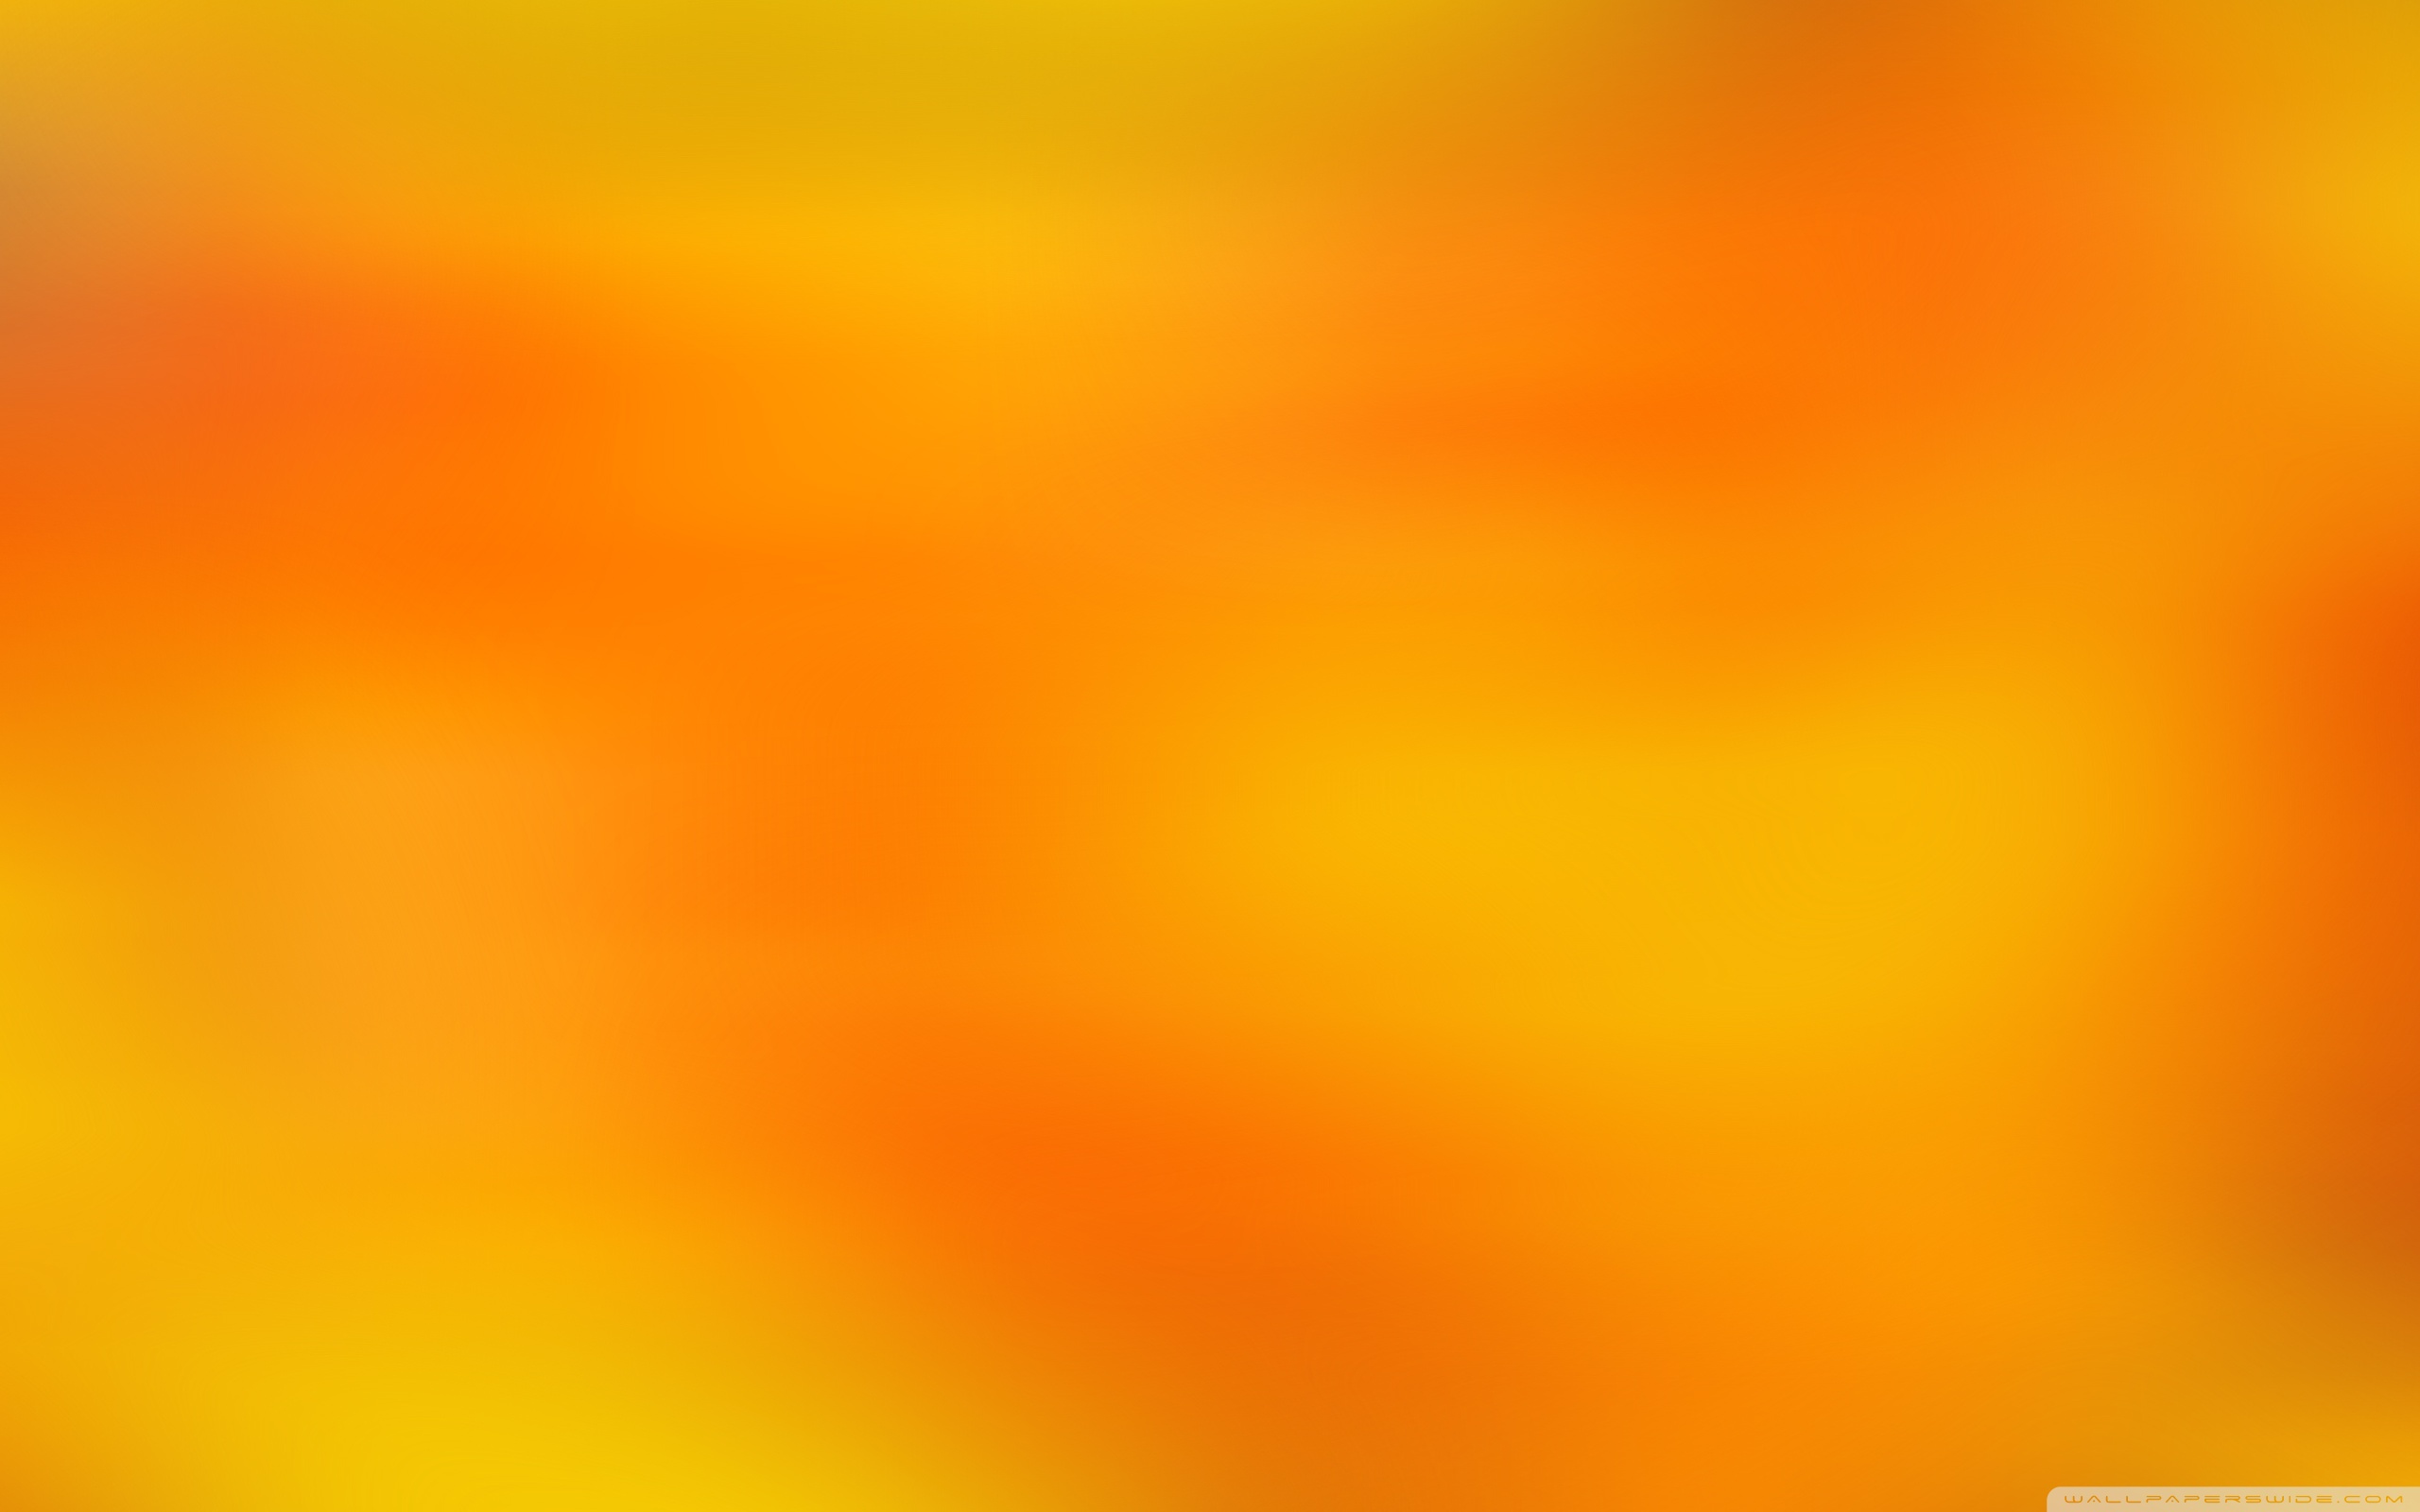 Minimalist Orange Ultra HD Desktop Background Wallpaper for 4K UHD TV, Tablet